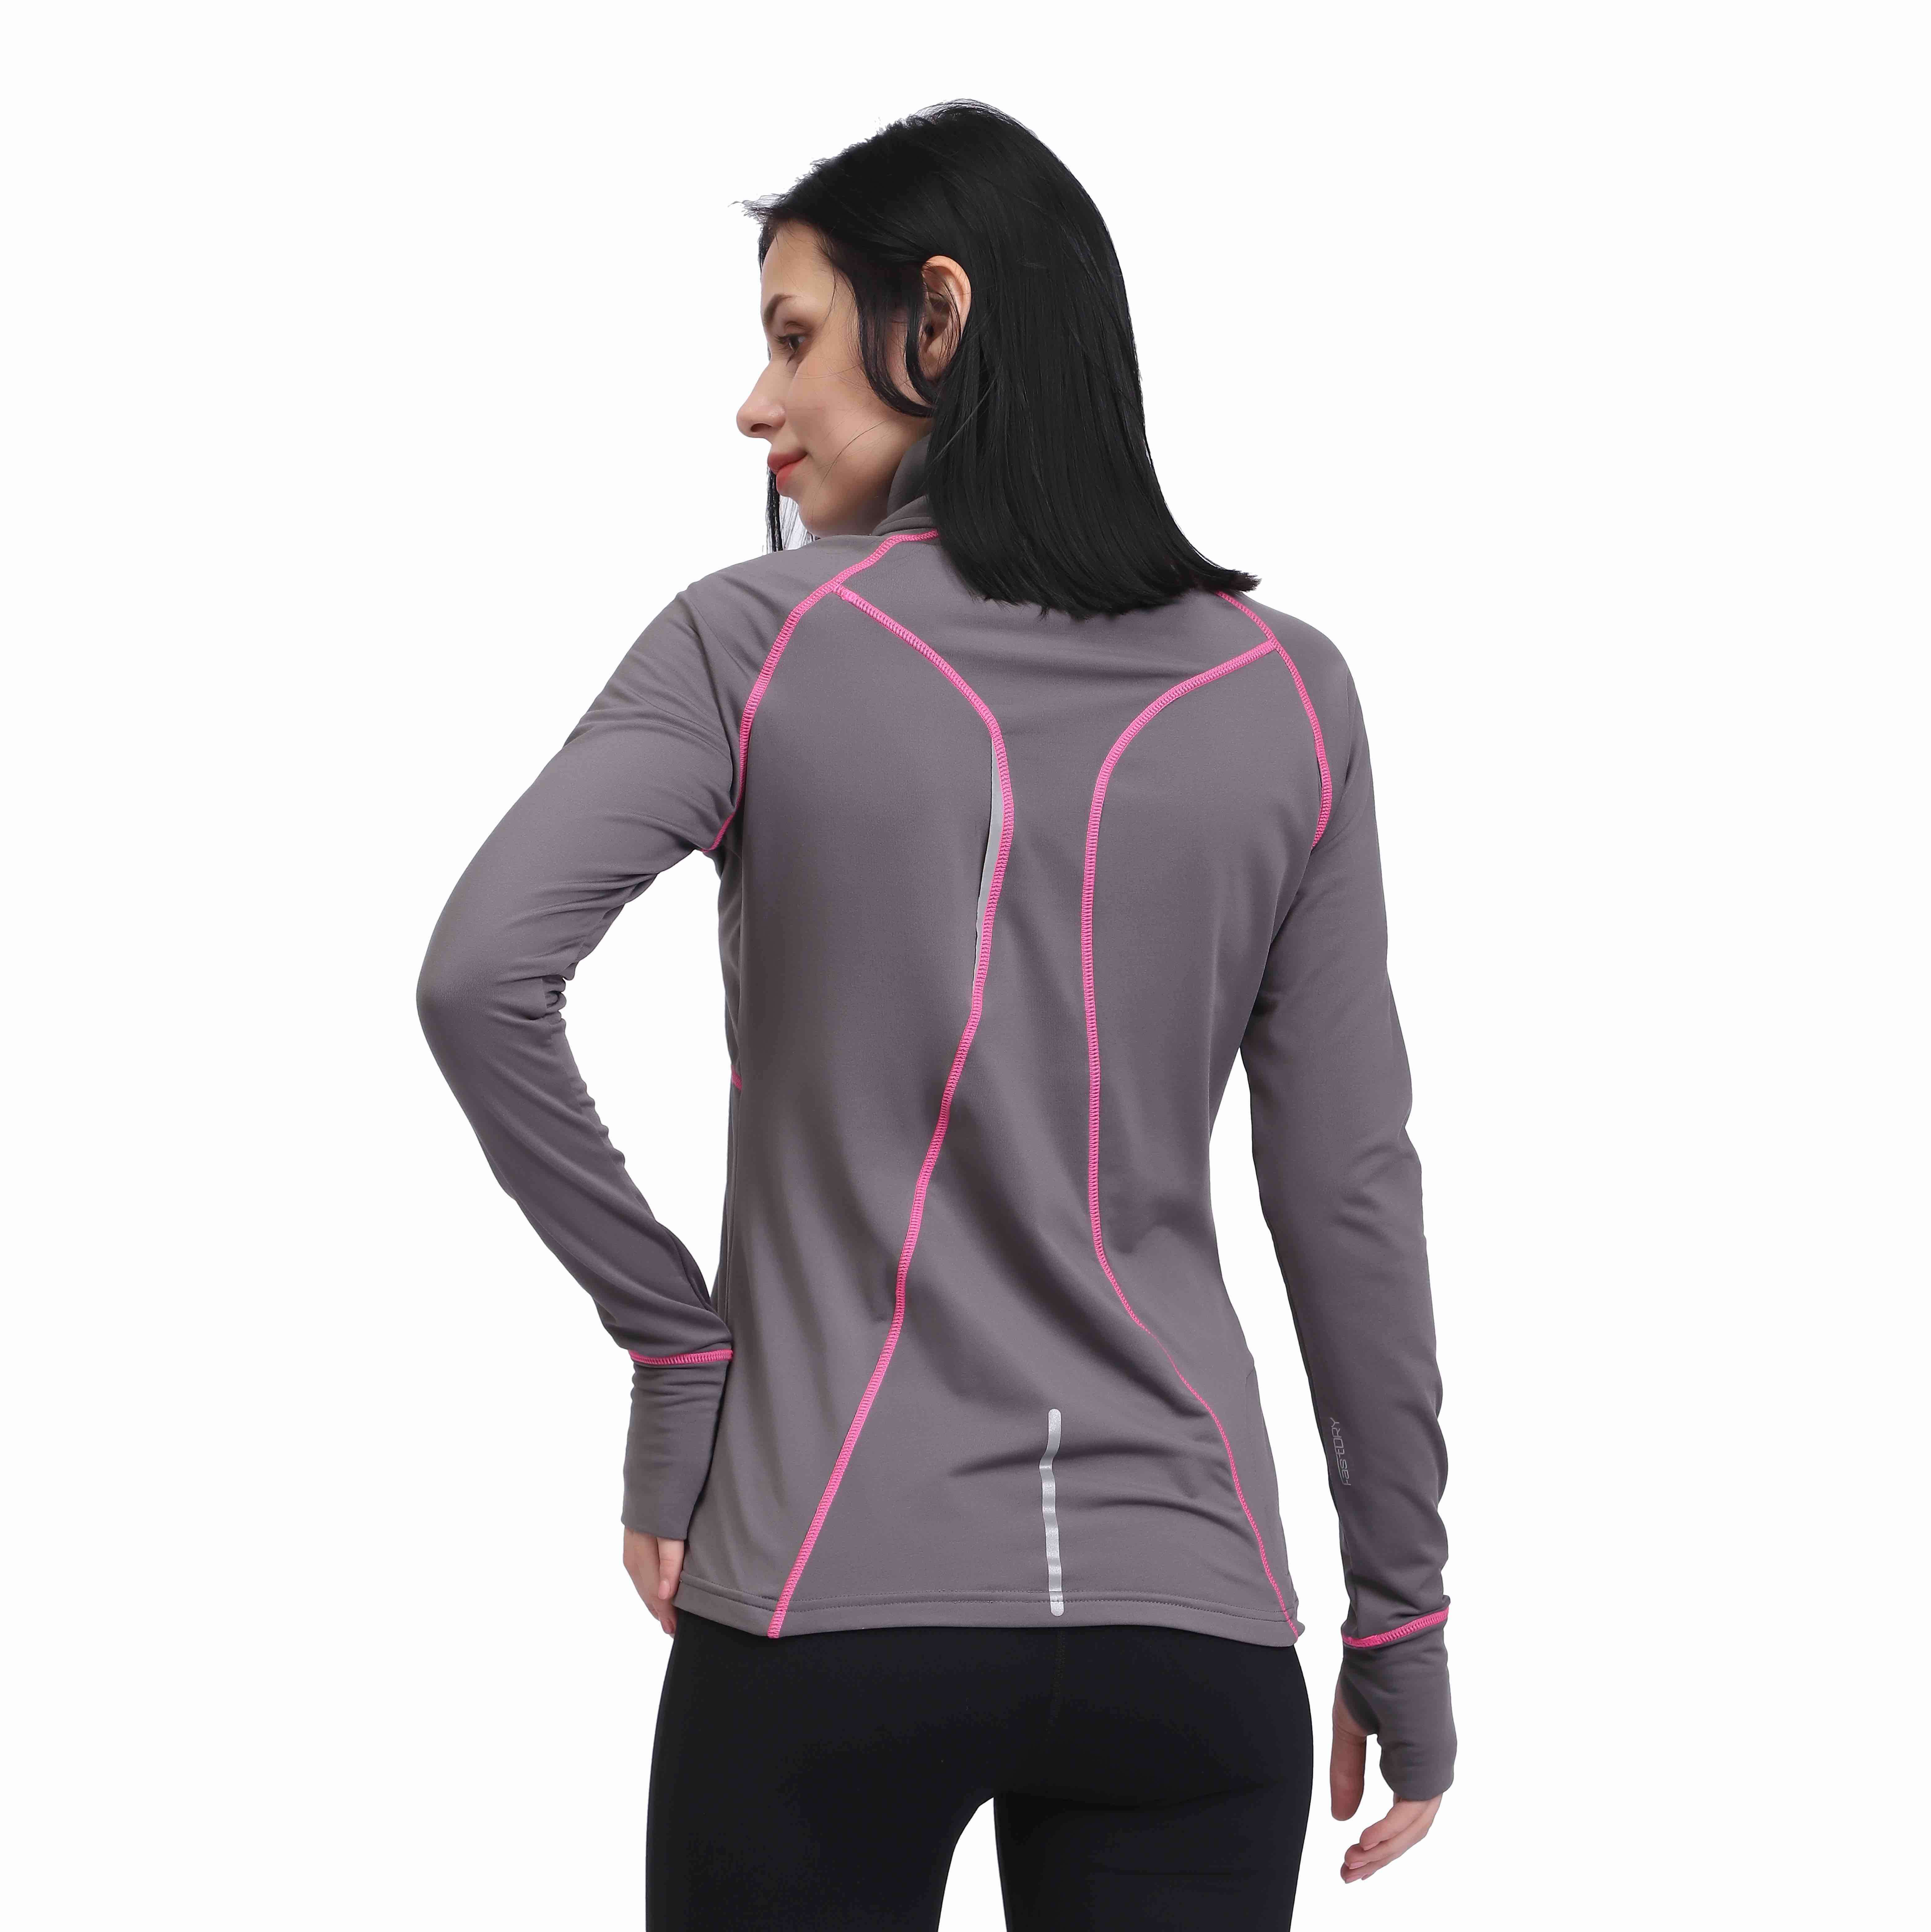 Women's Half Zip-up Yoga Workout Running Track Jacket 